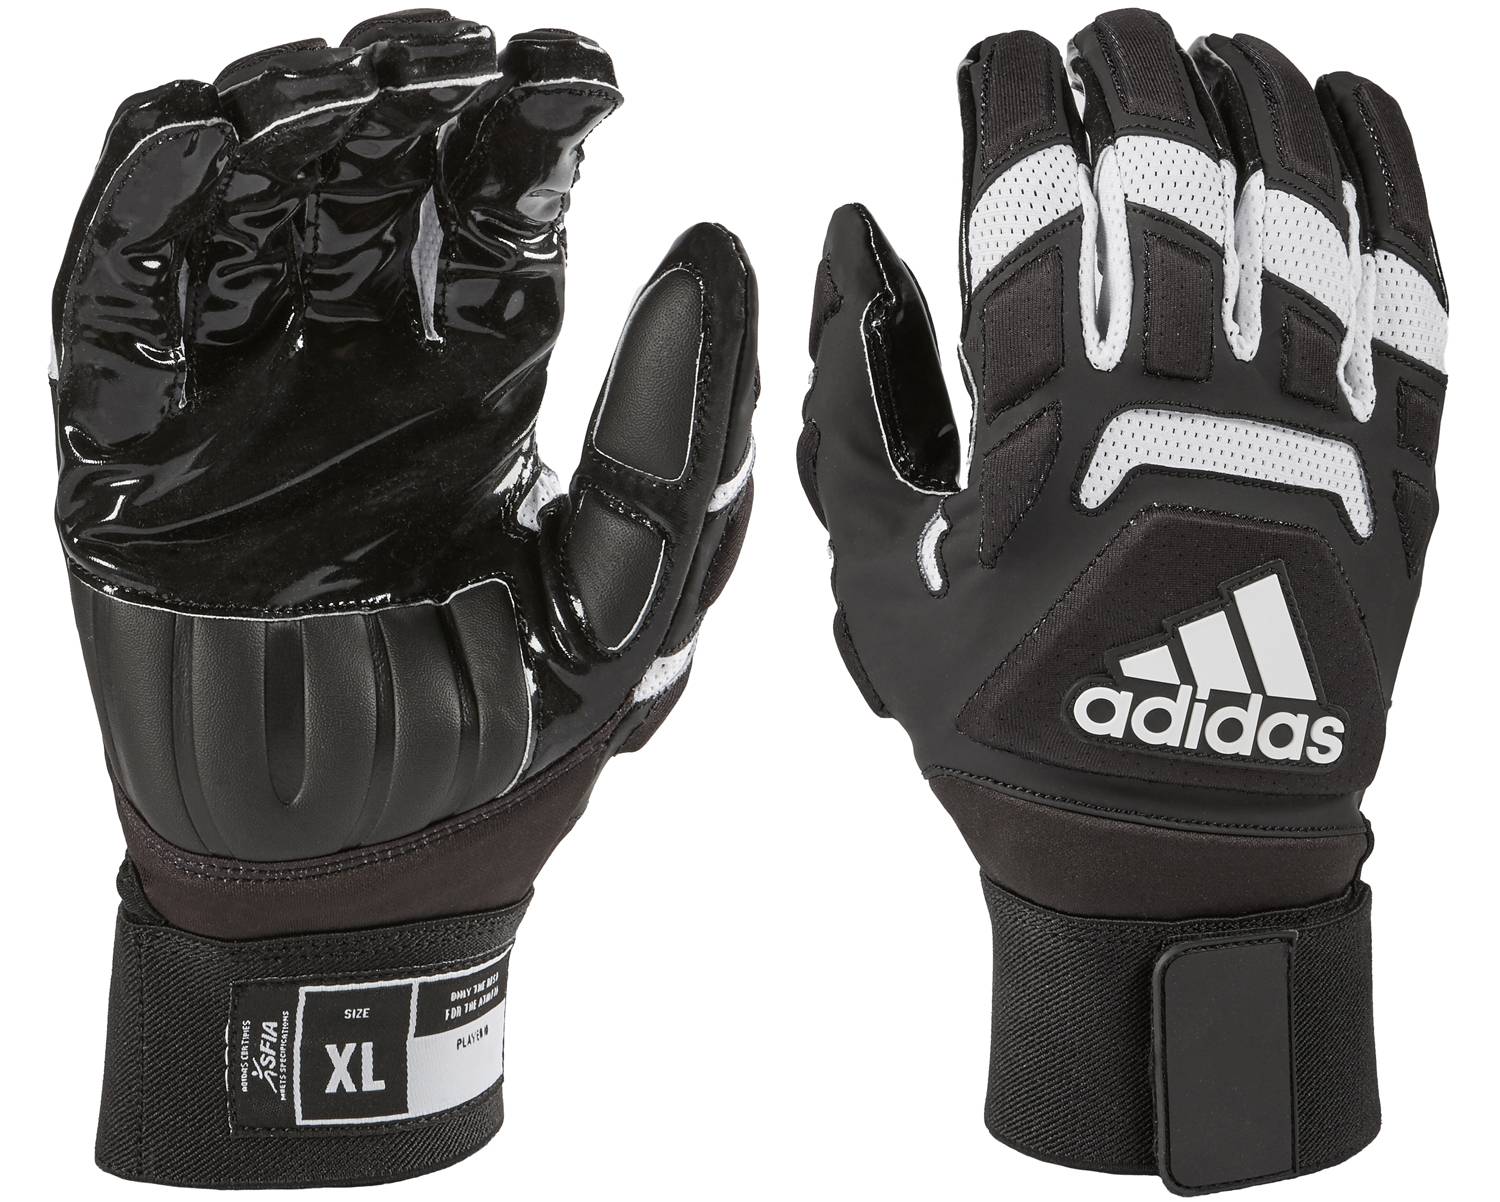 adidas lineman gloves